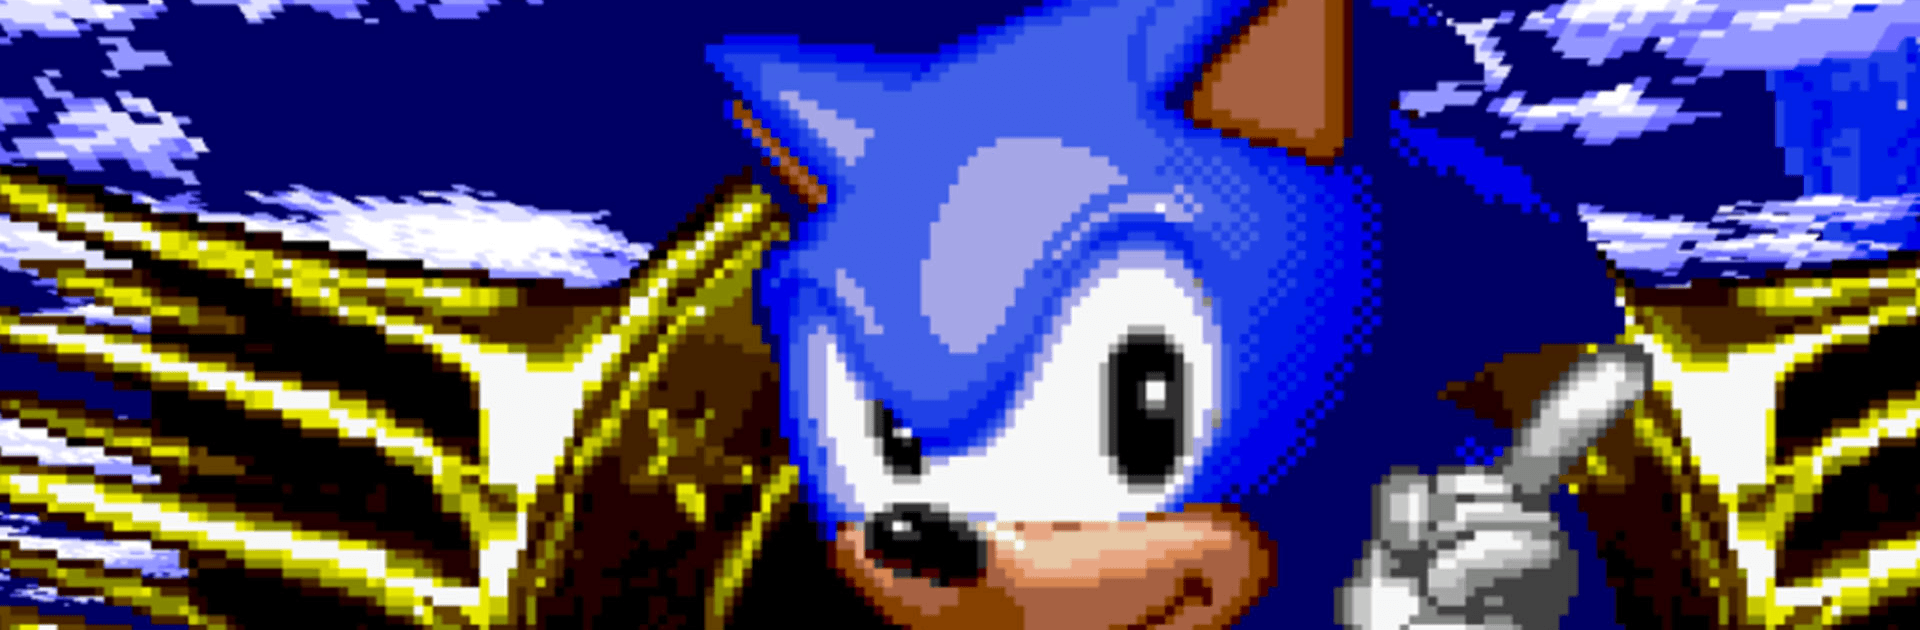 Download & Play Sonic The Hedgehog 2 Classic on PC & Mac (Emulator)